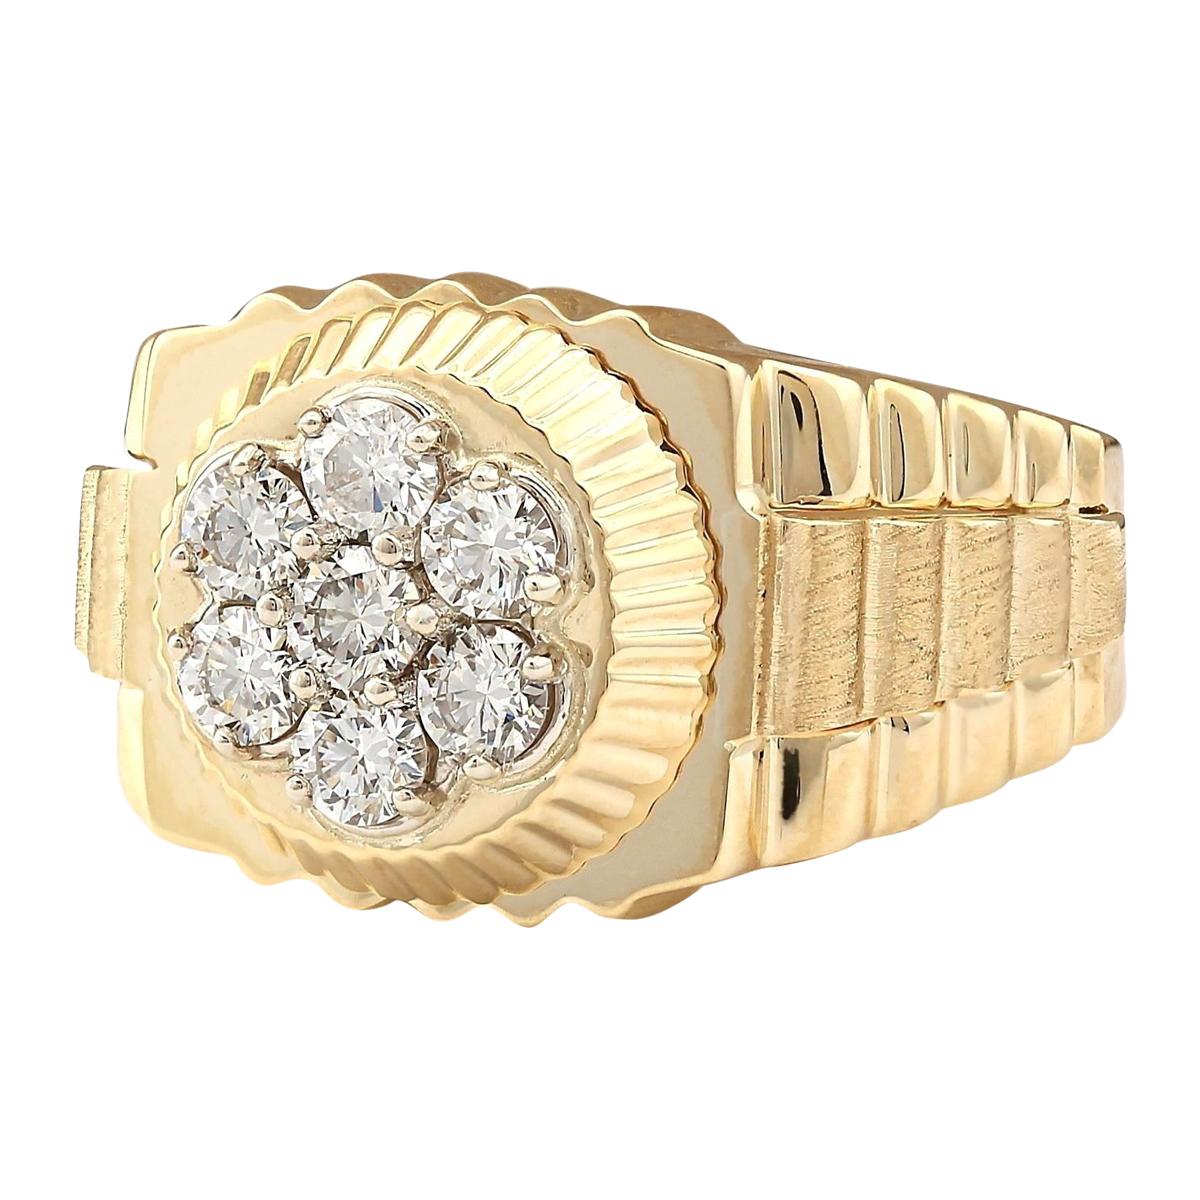 1.00 Carat Natural Diamond 18 Karat Yellow Gold Ring
Stamped: 18K Yellow Gold
Total Ring Weight: 13.5 Grams
Total Natural Diamond Weight is 1.00 Carat
Color: F-G, Clarity: VS2-SI1
Face Measures: 15.30x16.30 mm
Sku: [703435W]